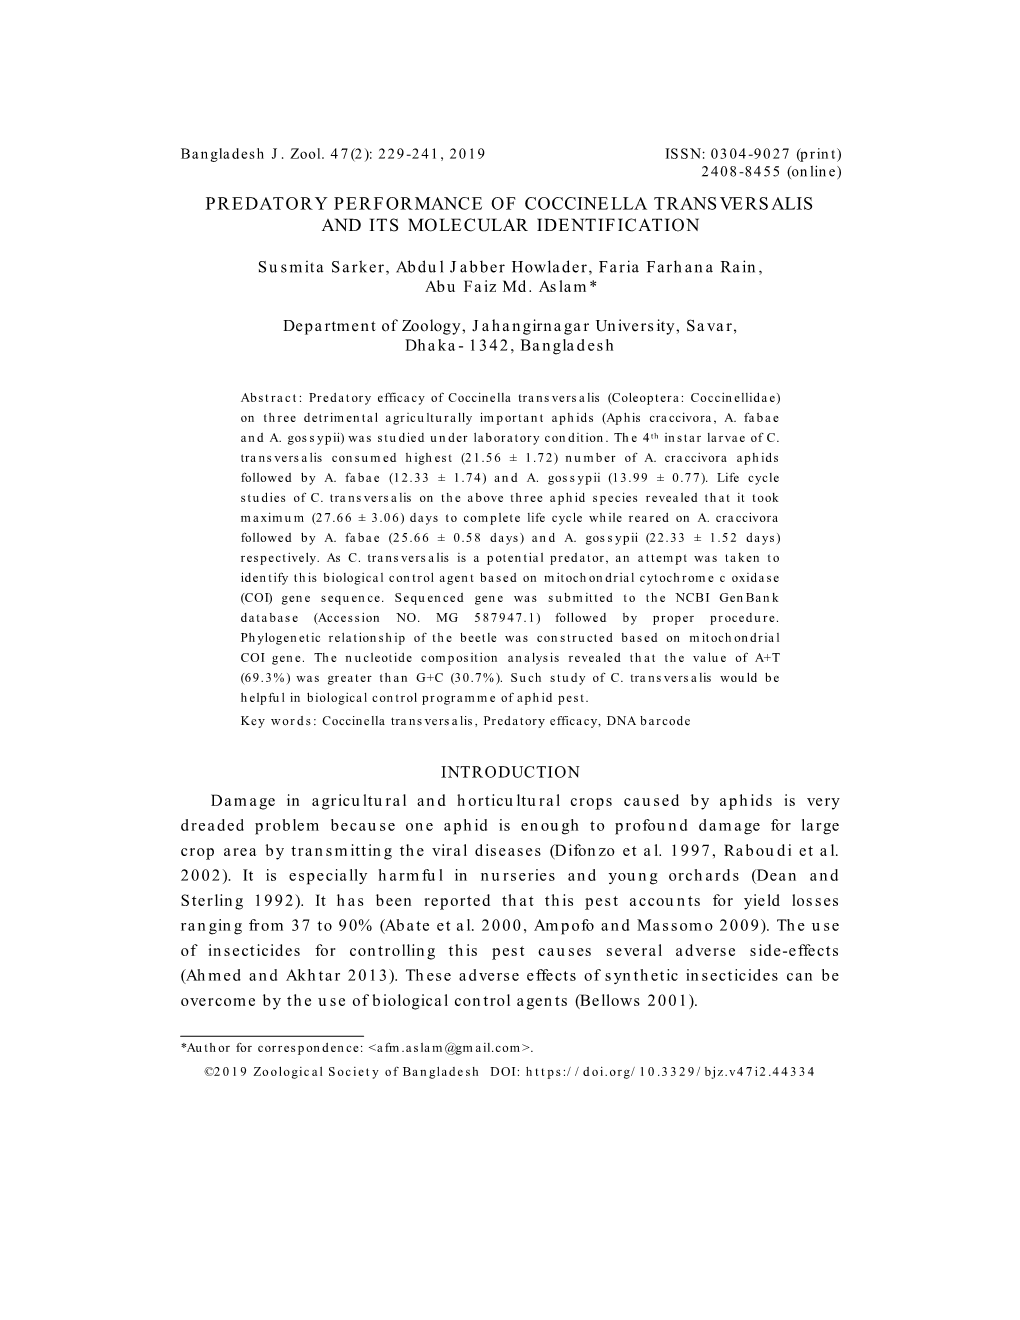 Predatory Performance of Coccinella Transversalis and Its Molecular Identification